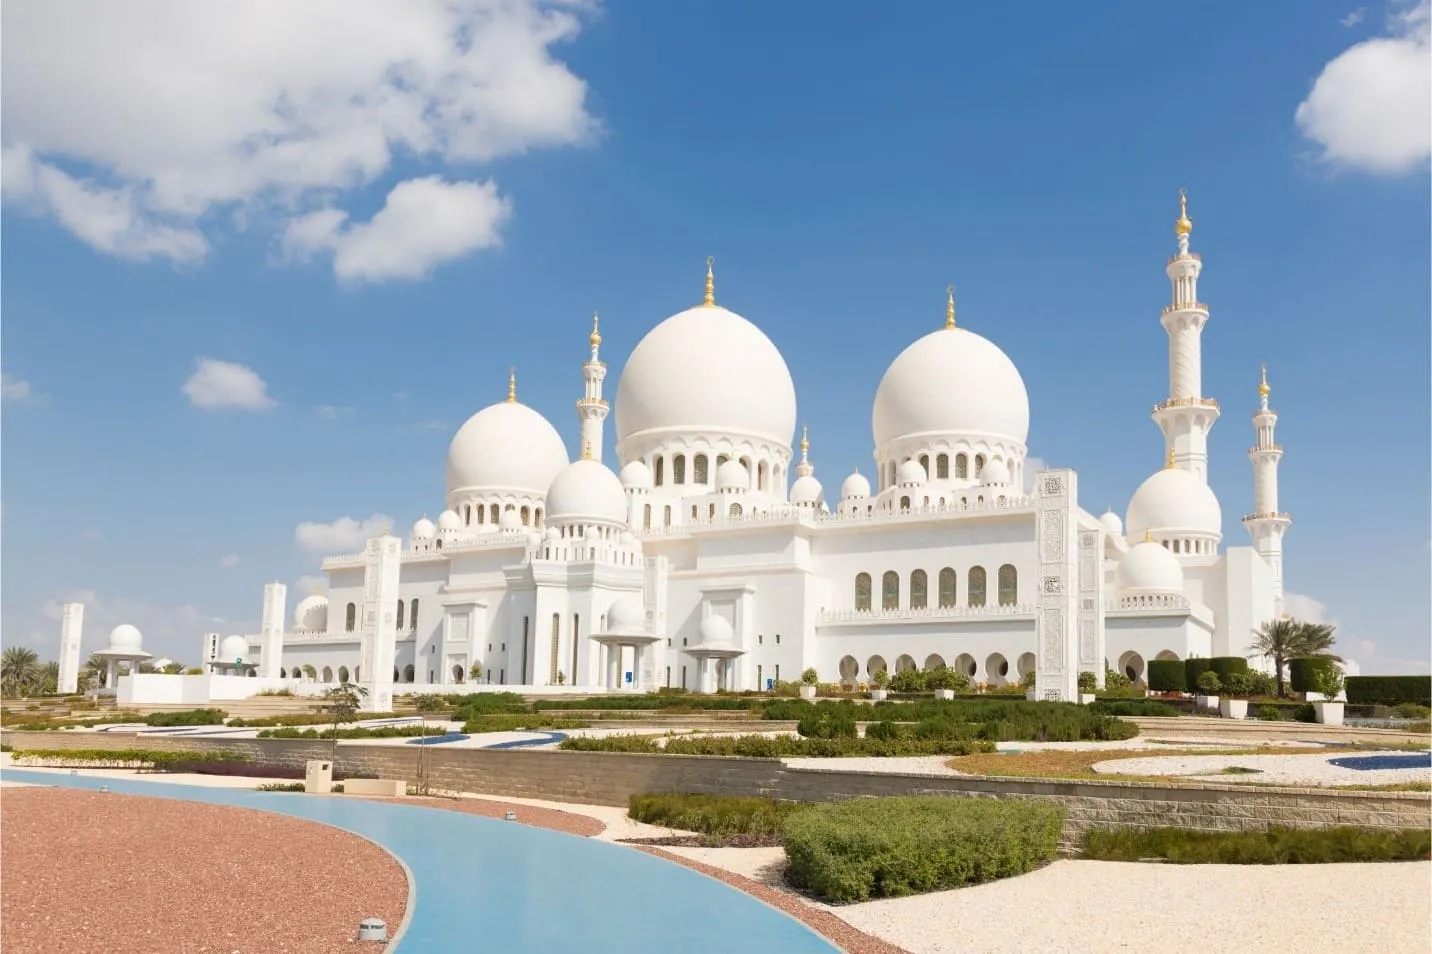 Future Trends in Abu Dhabi's Architecture